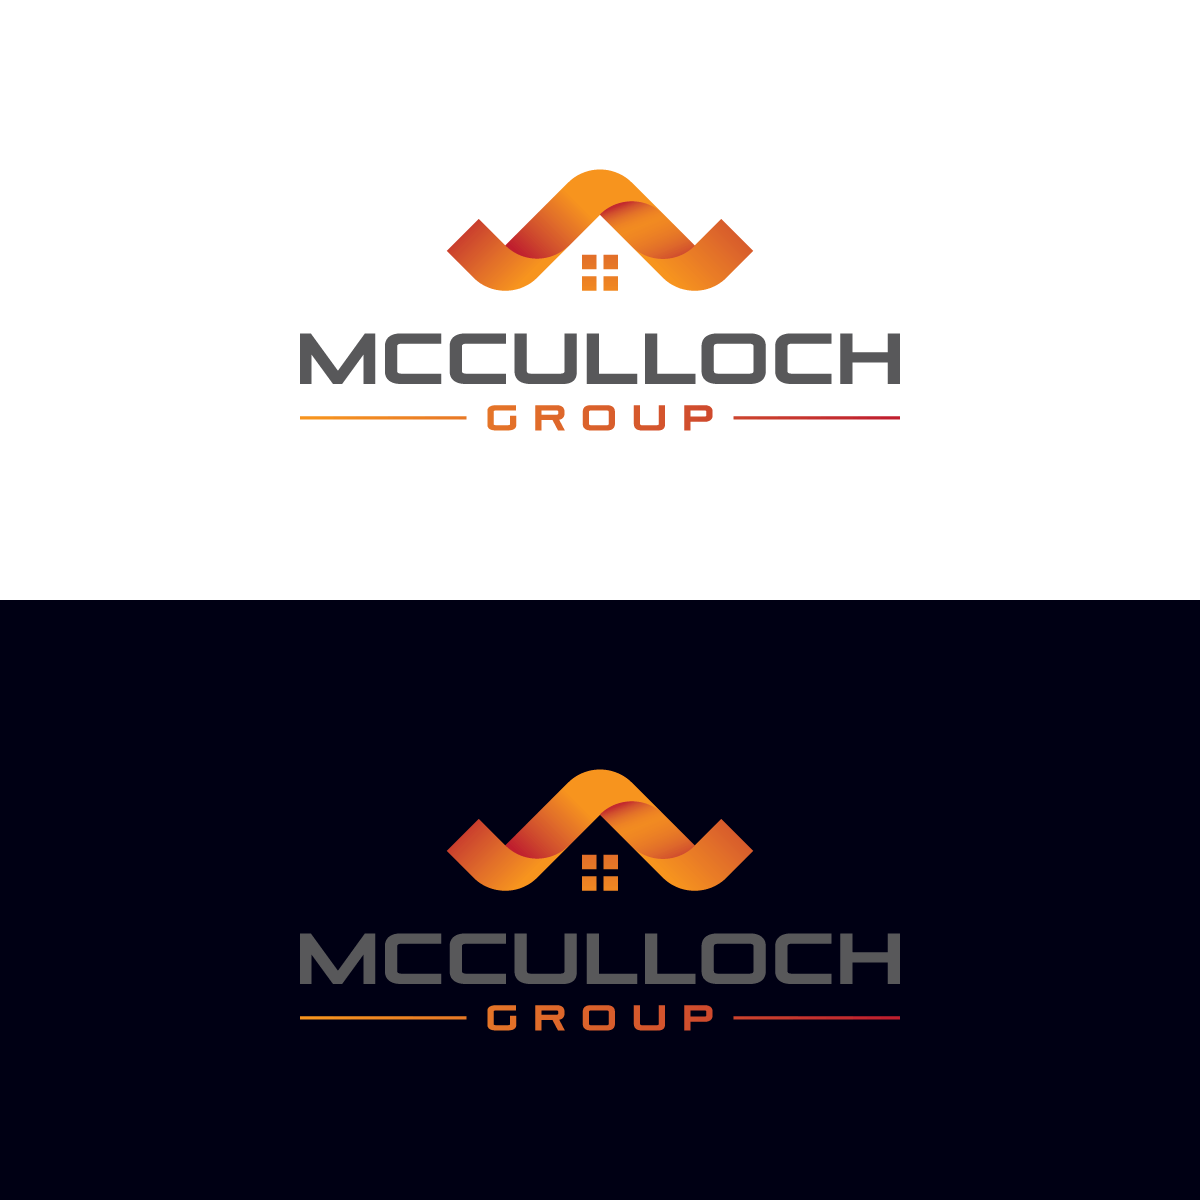 McCulloch Logo - Modern, Professional Logo Design for McCulloch Group